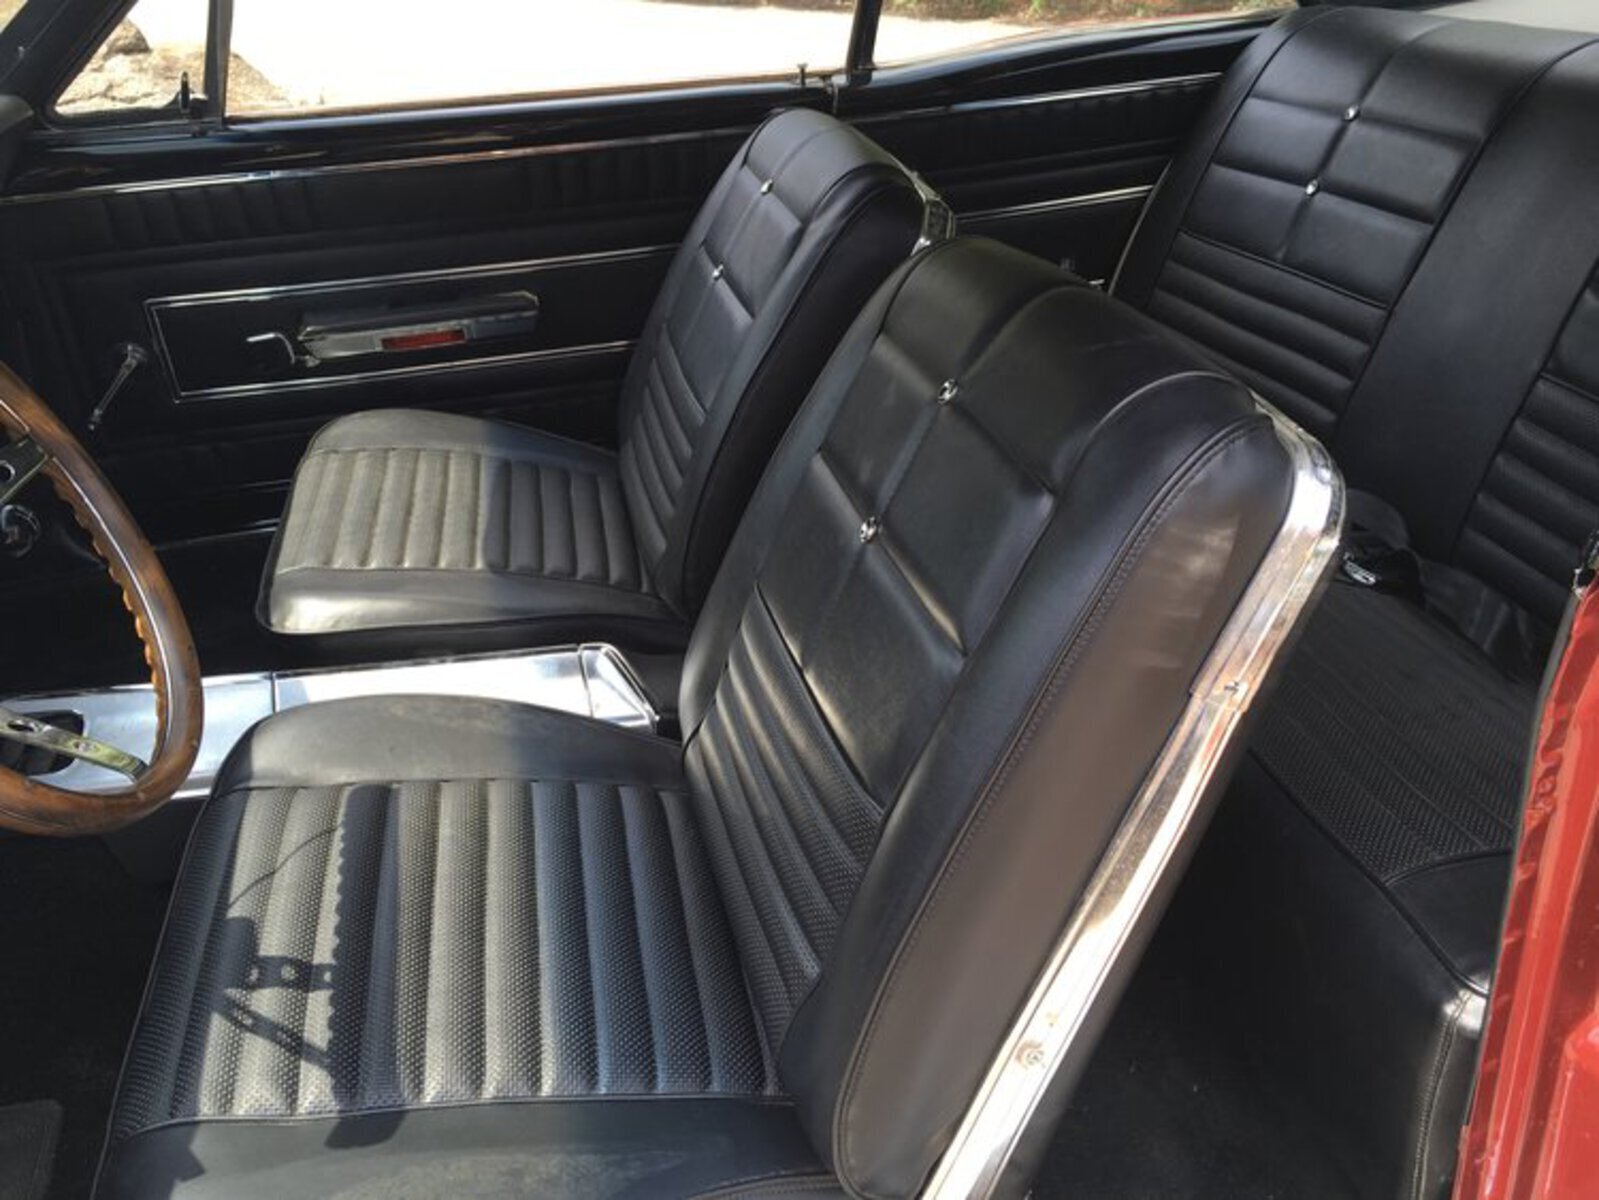 /public/hot-rods/66-ford-leather-seats-minneapolis-custom-hot-rod-restorations-1.jpg